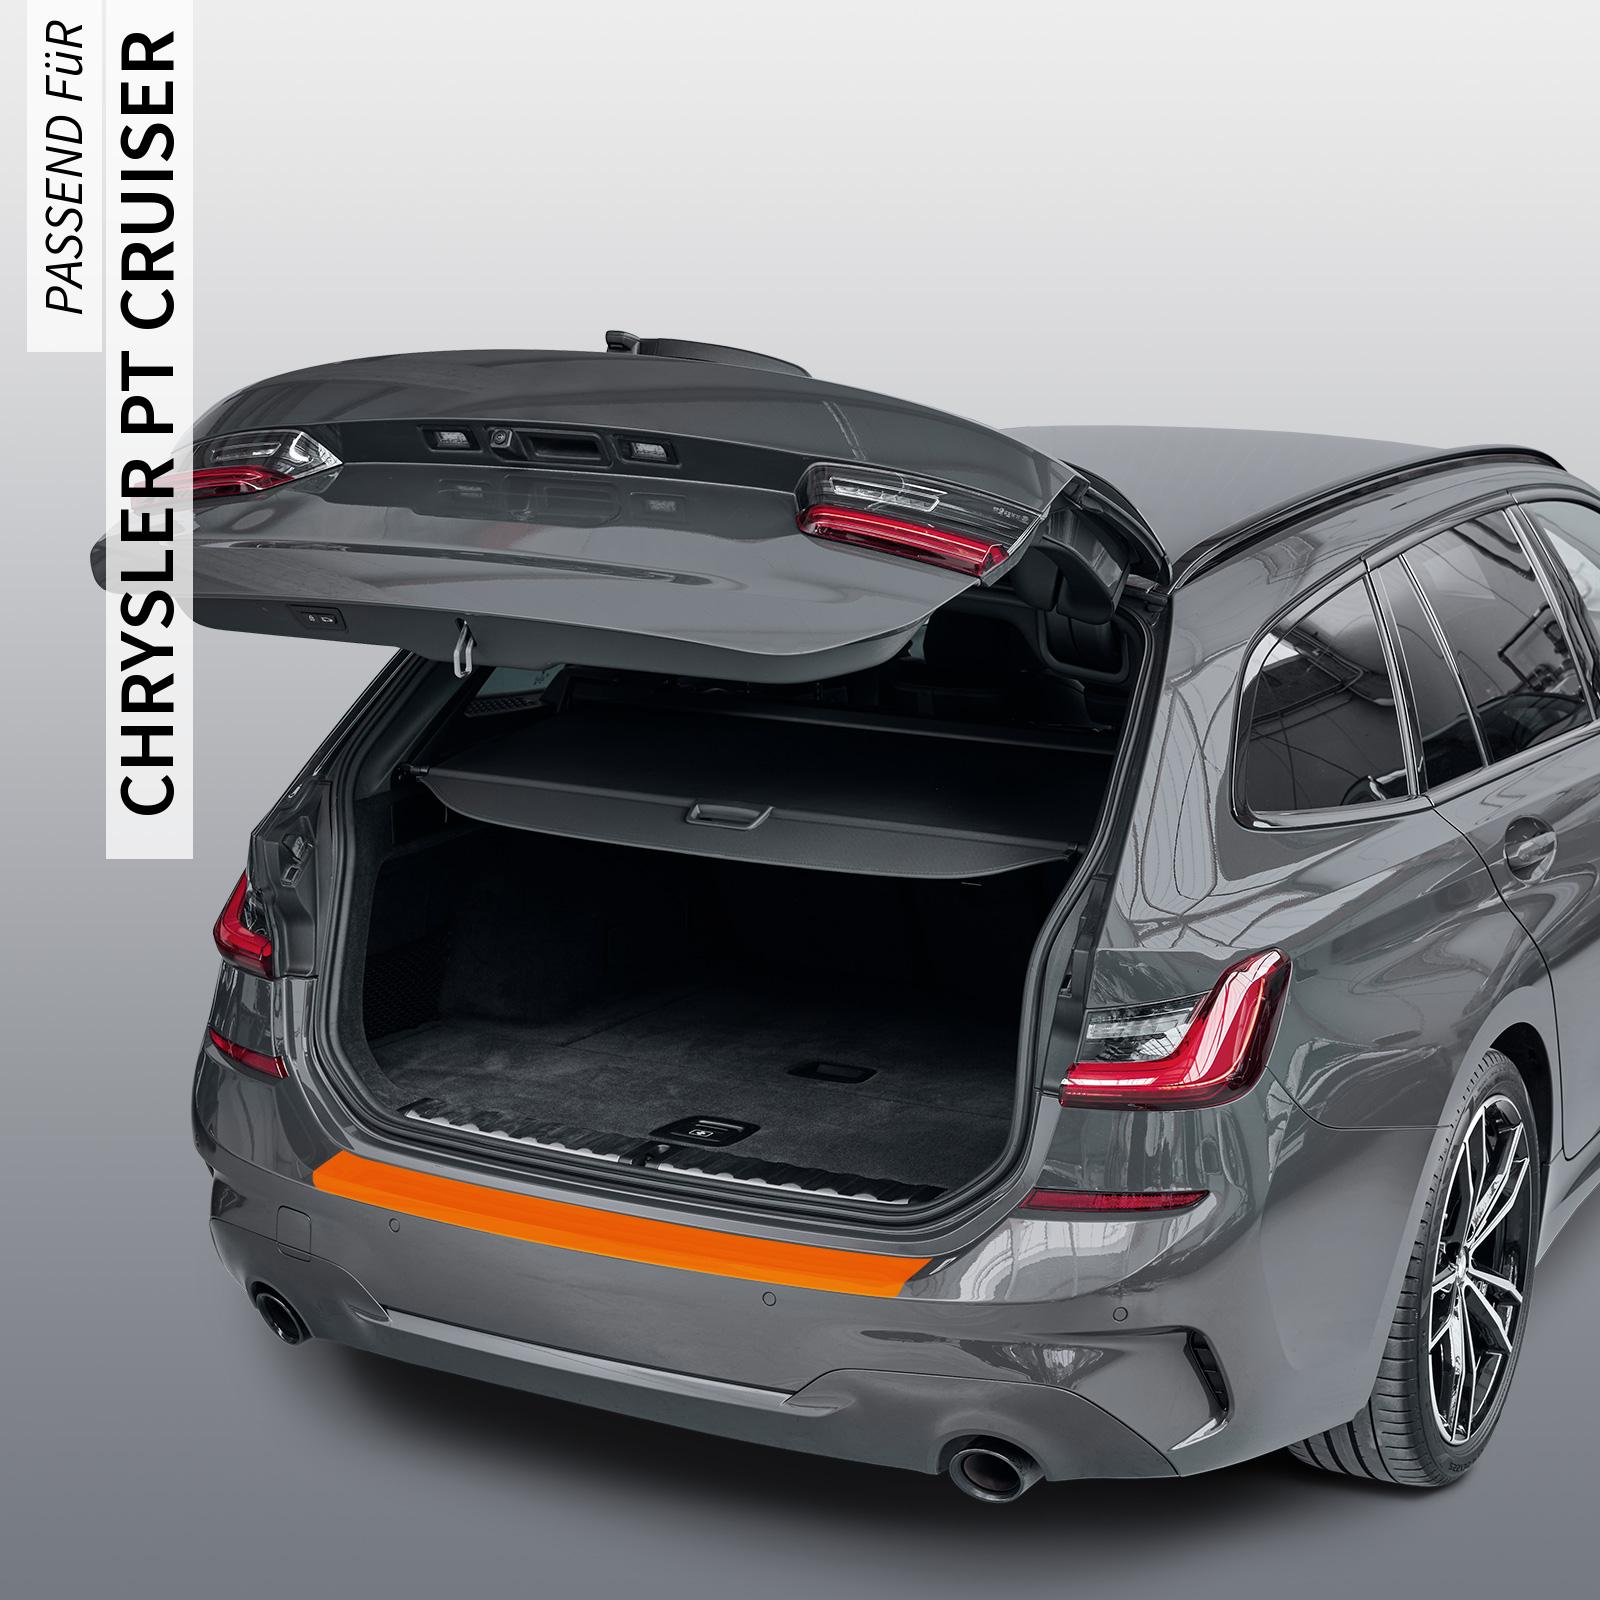 Ladekantenschutzfolie - Transparent Glatt MATT 110 µm stark  für Chrysler PT Cruiser ab BJ 2006, ab Faceliftmodell